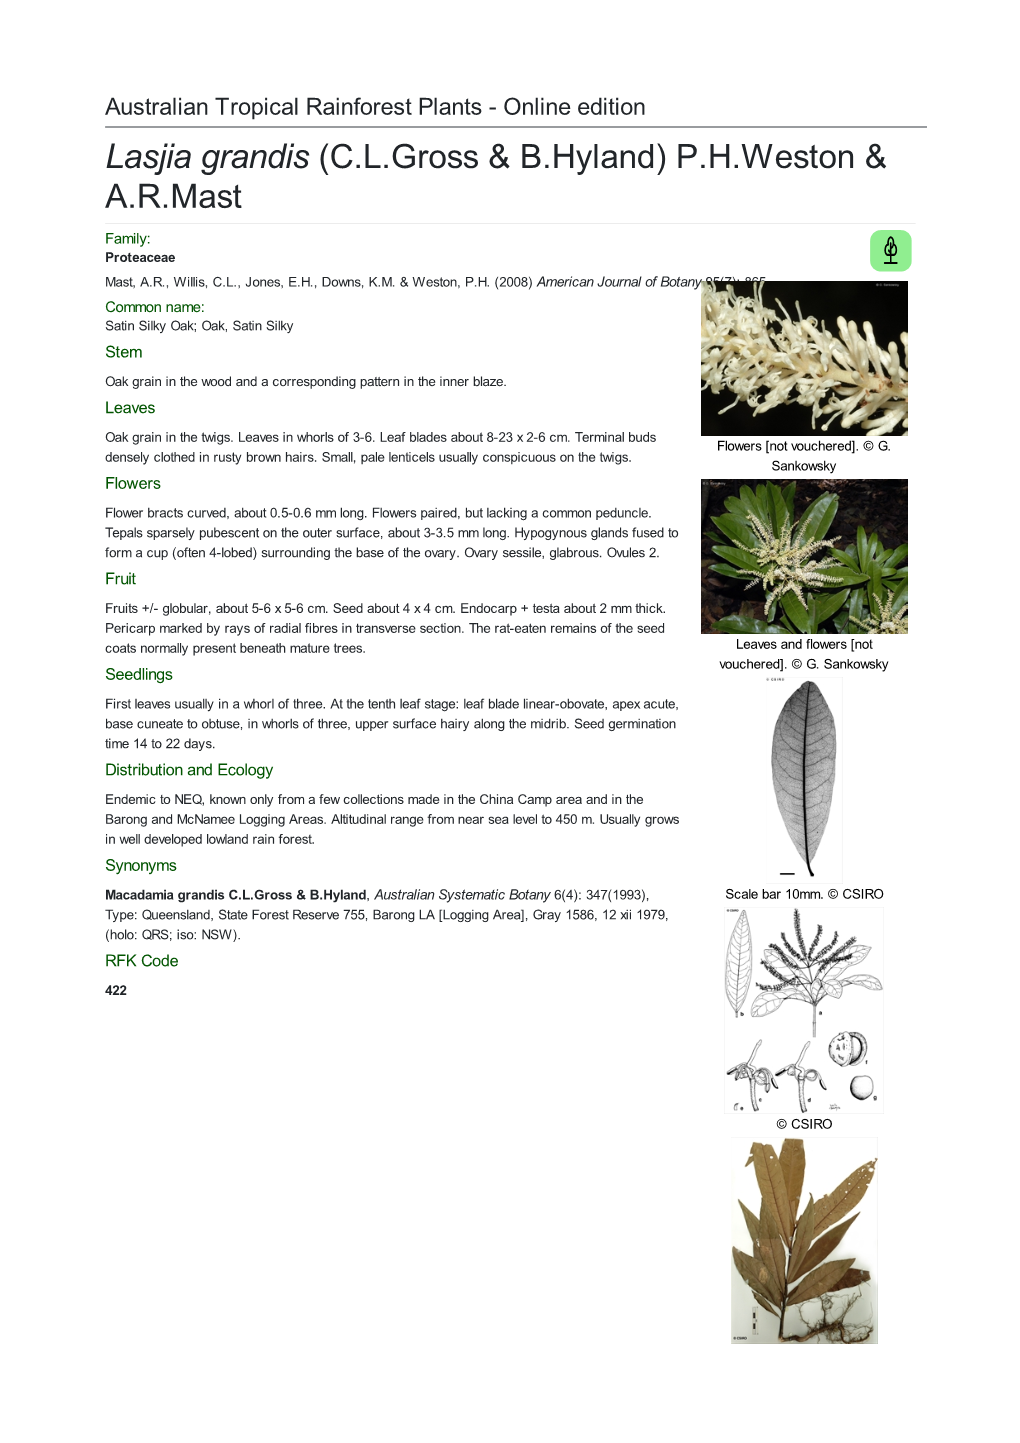 Lasjia Grandis (C.L.Gross & B.Hyland) P.H.Weston & A.R.Mast Family: Proteaceae Mast, A.R., Willis, C.L., Jones, E.H., Downs, K.M